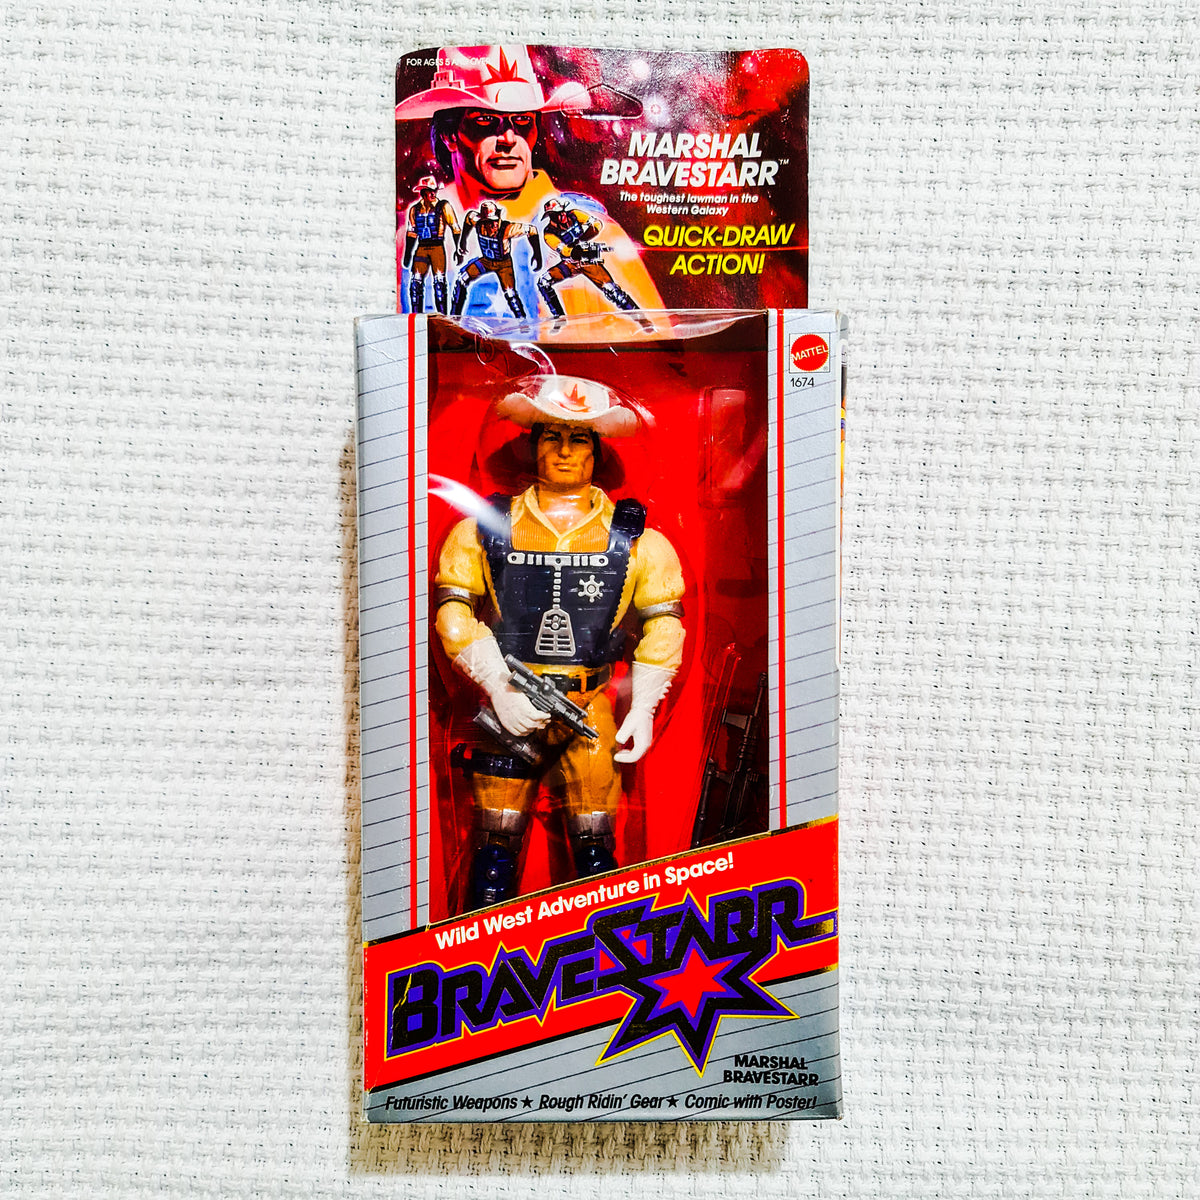 ToySack, Laser-Fire Marshall BraveStarr (MISB, Excellent Box Condition),  BraveStarr by Mattel, 1987 – ToysAaack